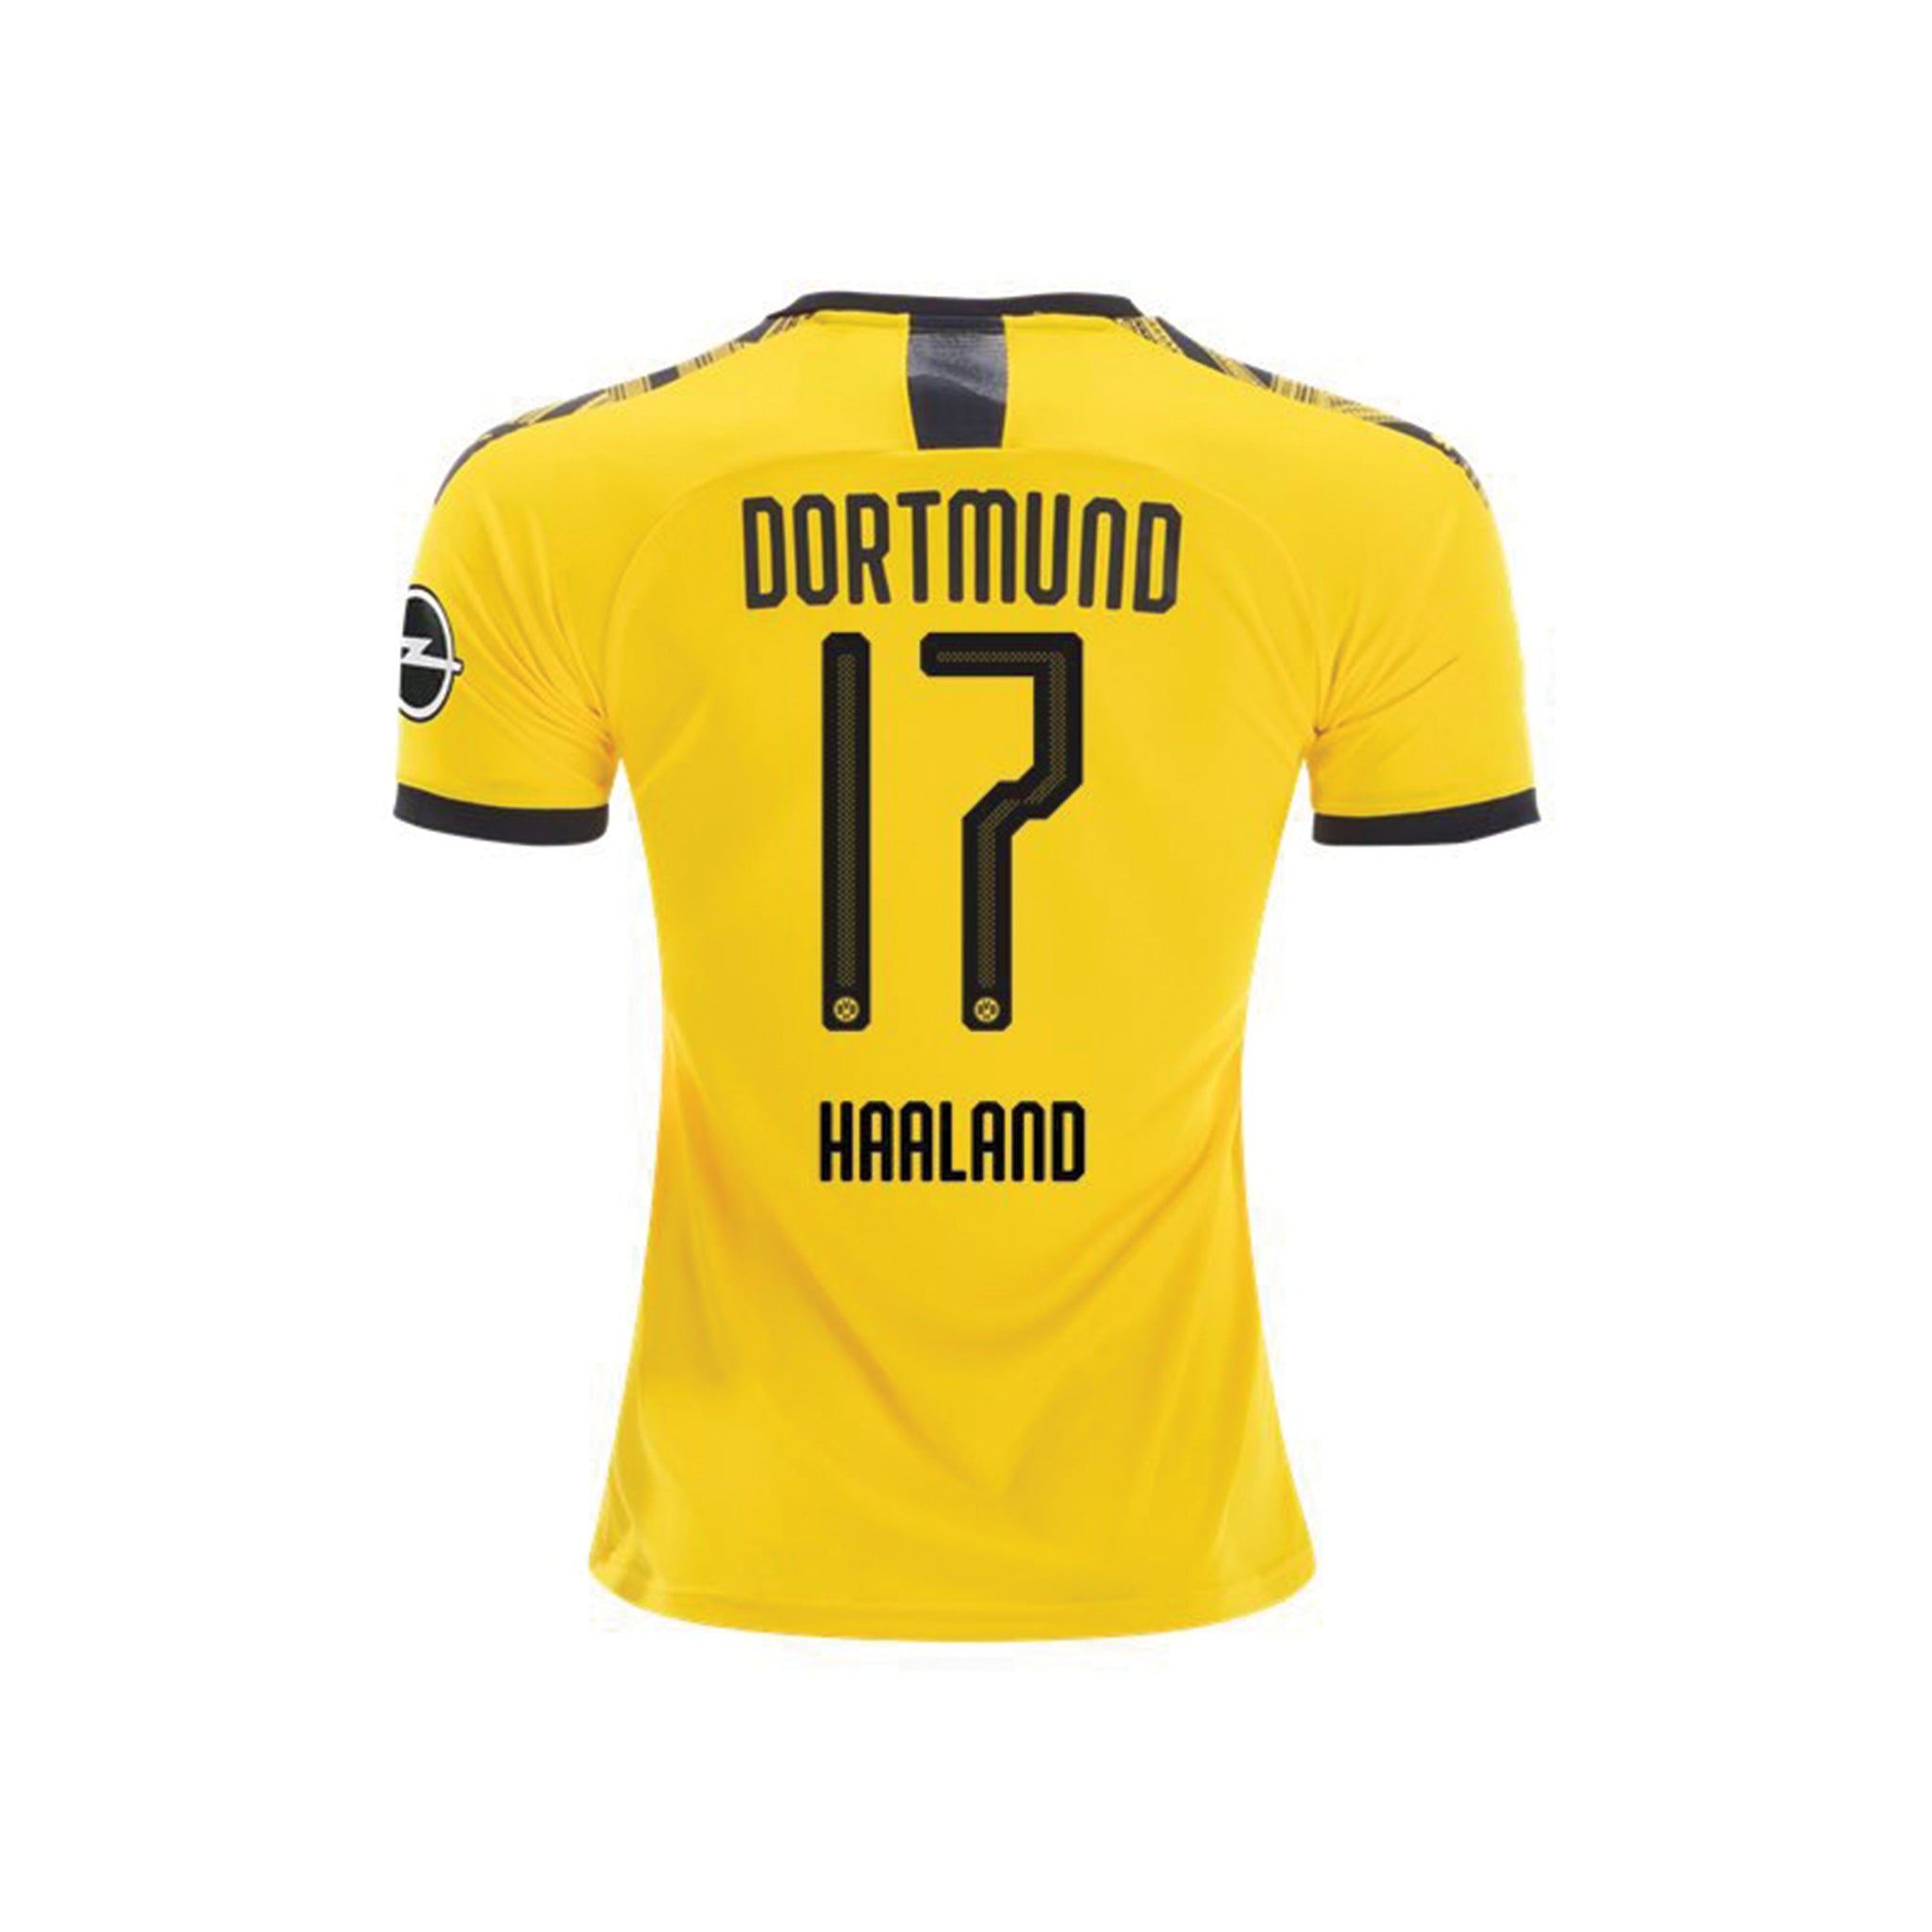 PUMA BVB Borussia Dortmund Home HAALAND 19/20